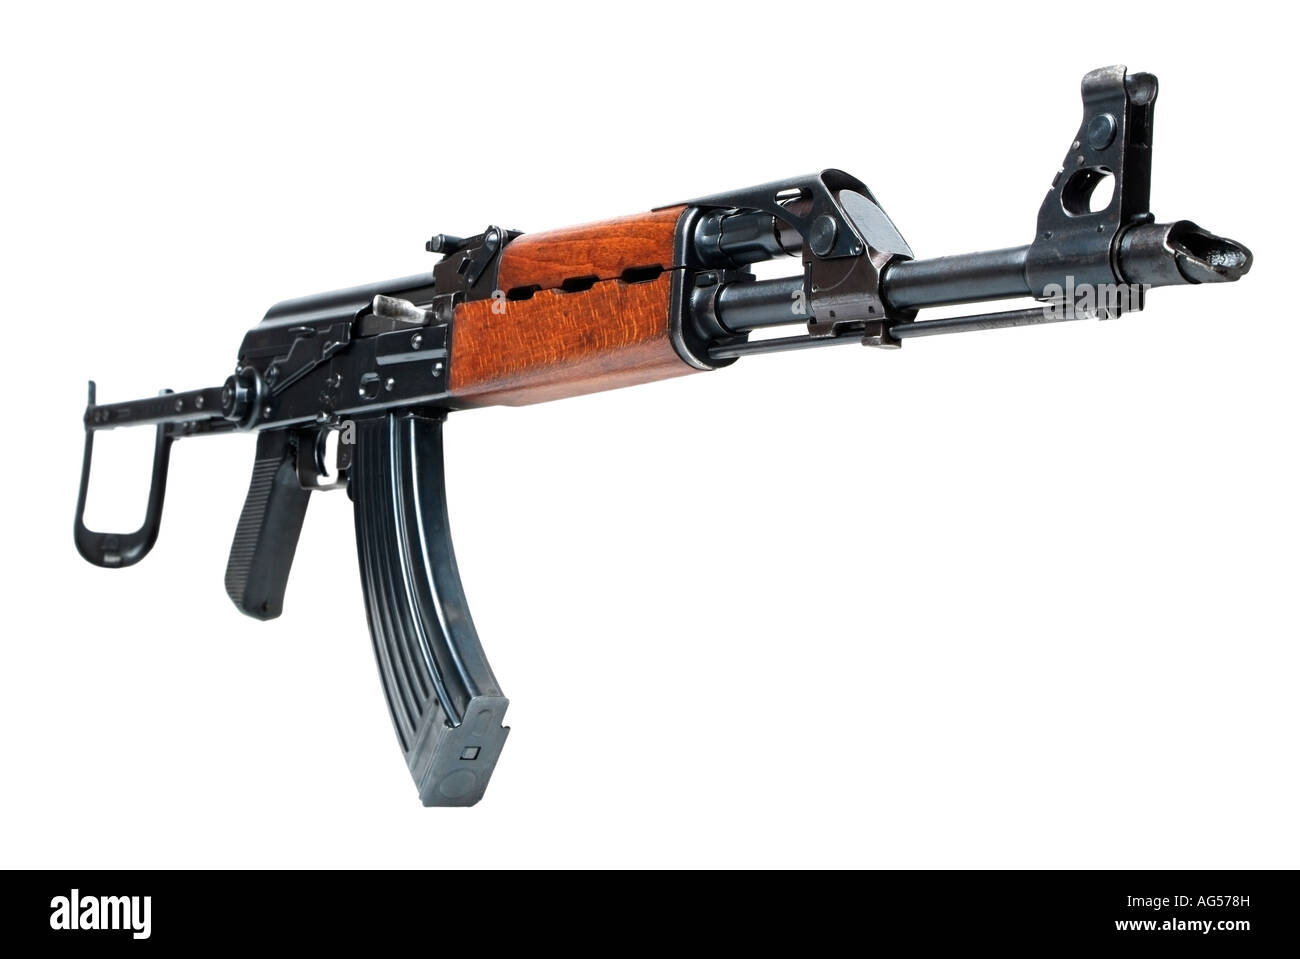 Kalashnikov AK47 AKMS Automatic Assault Rifle. Stock Photo